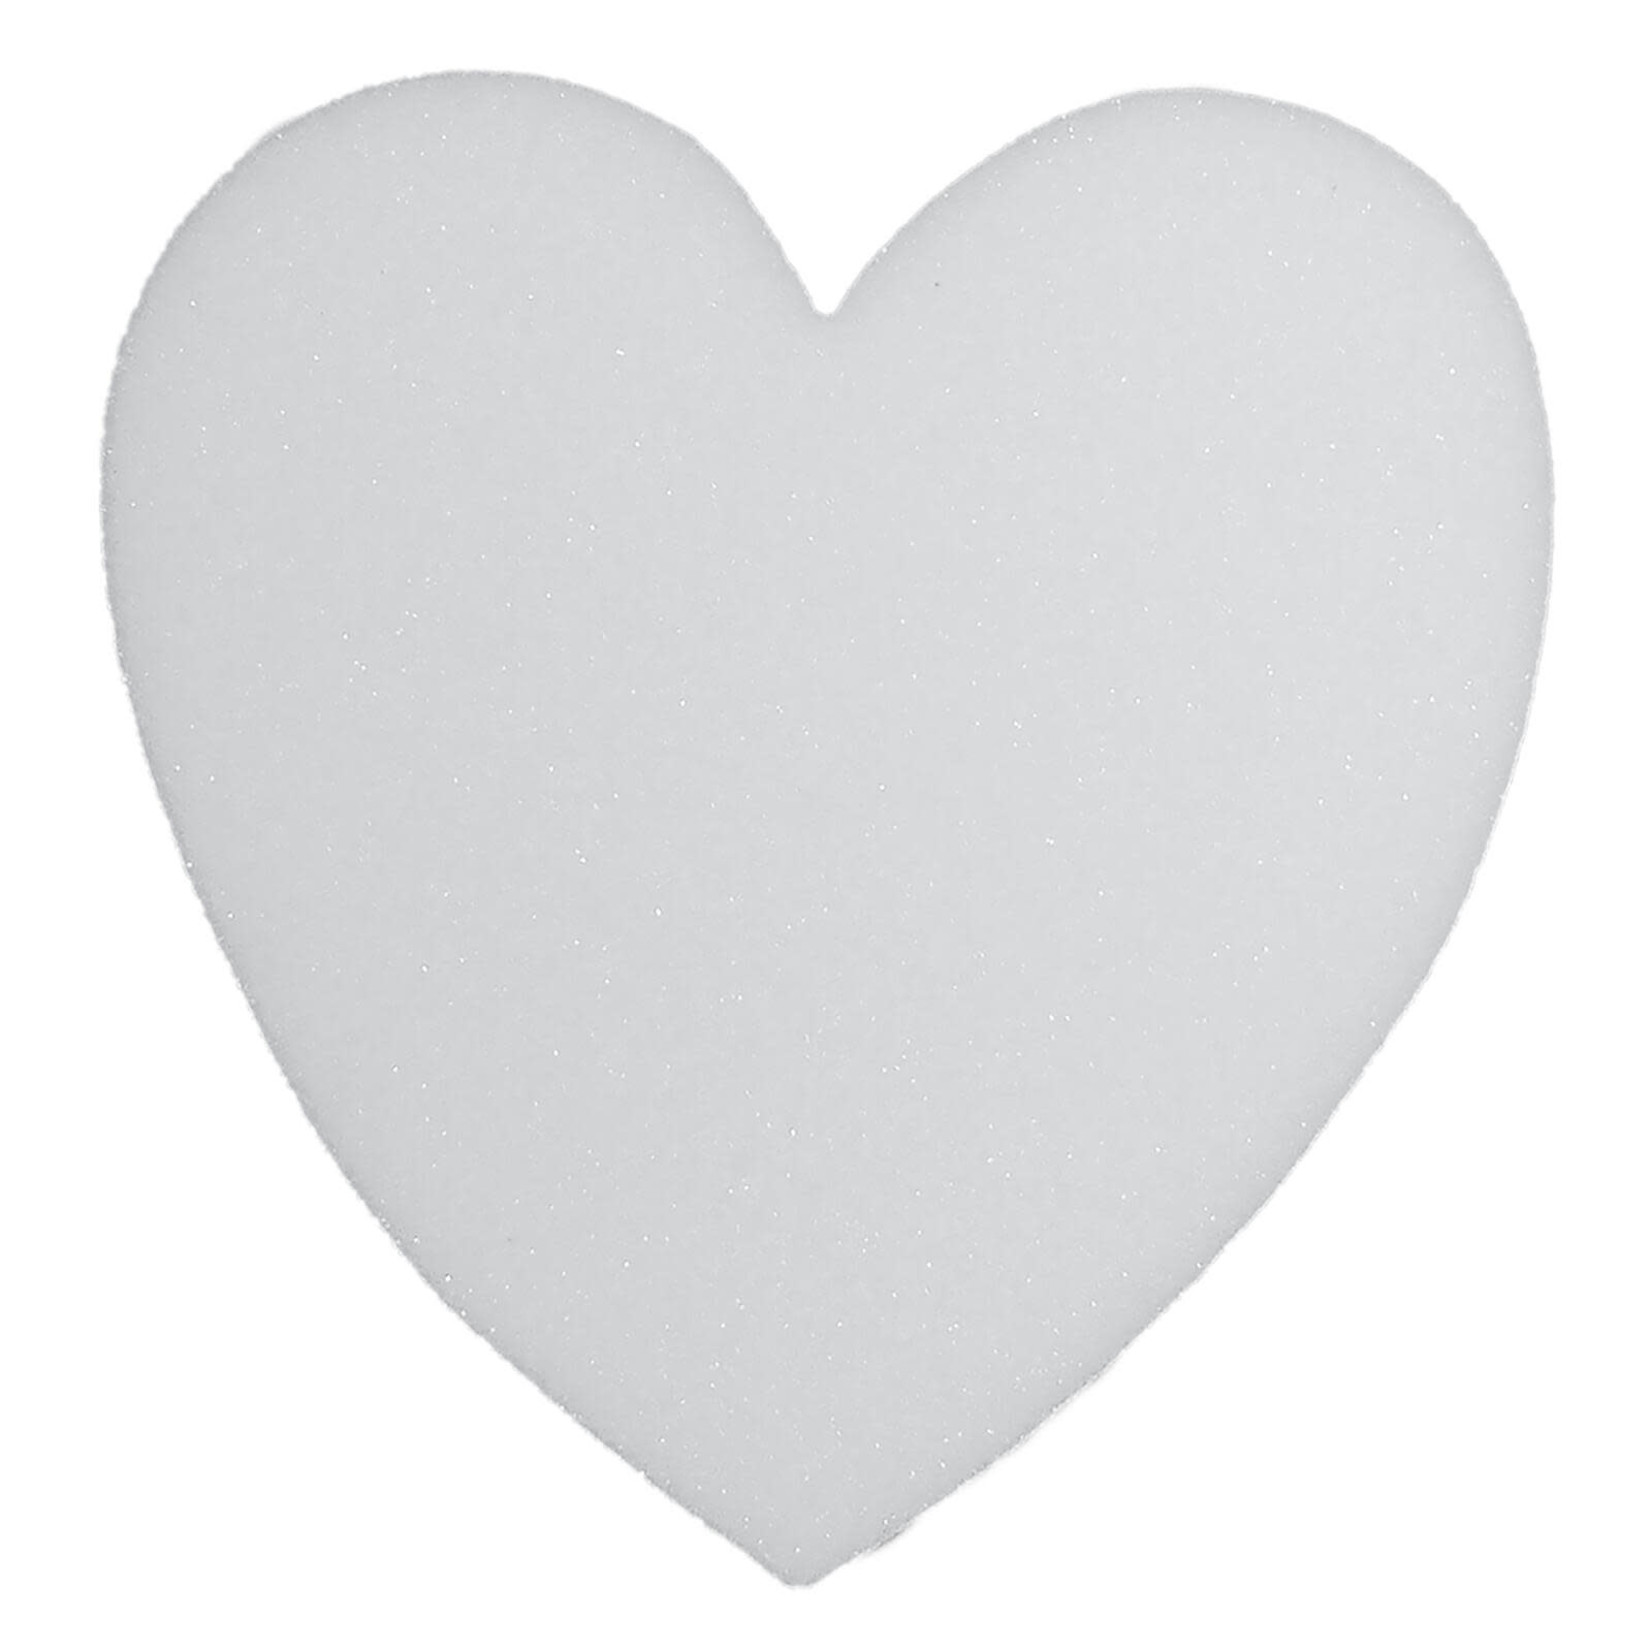 14x2"" White solid STYROFOAM Heart